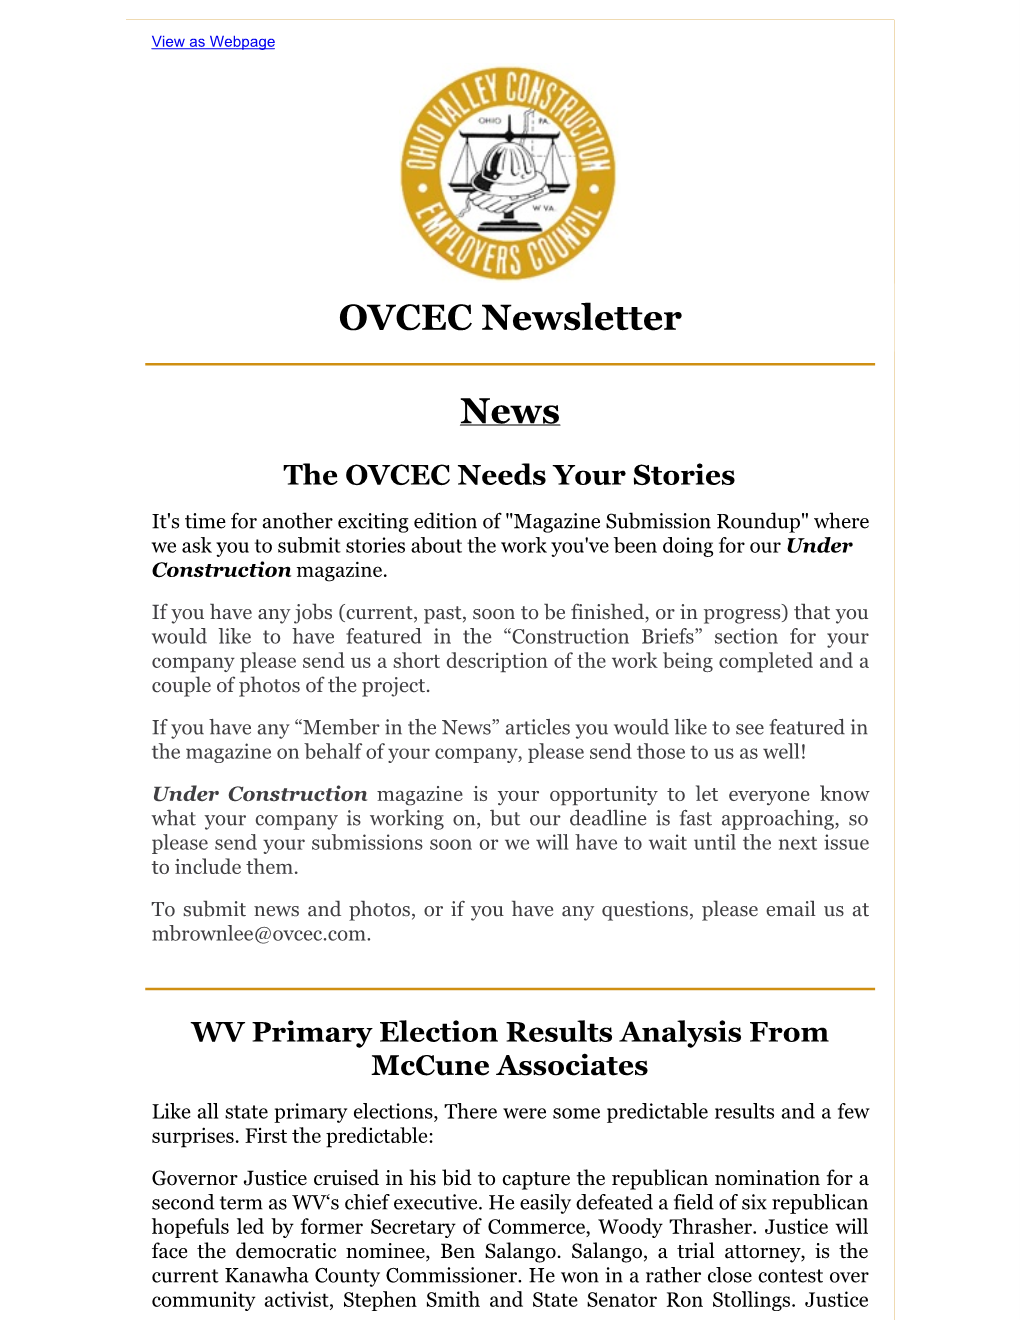 OVCEC Newsletter News